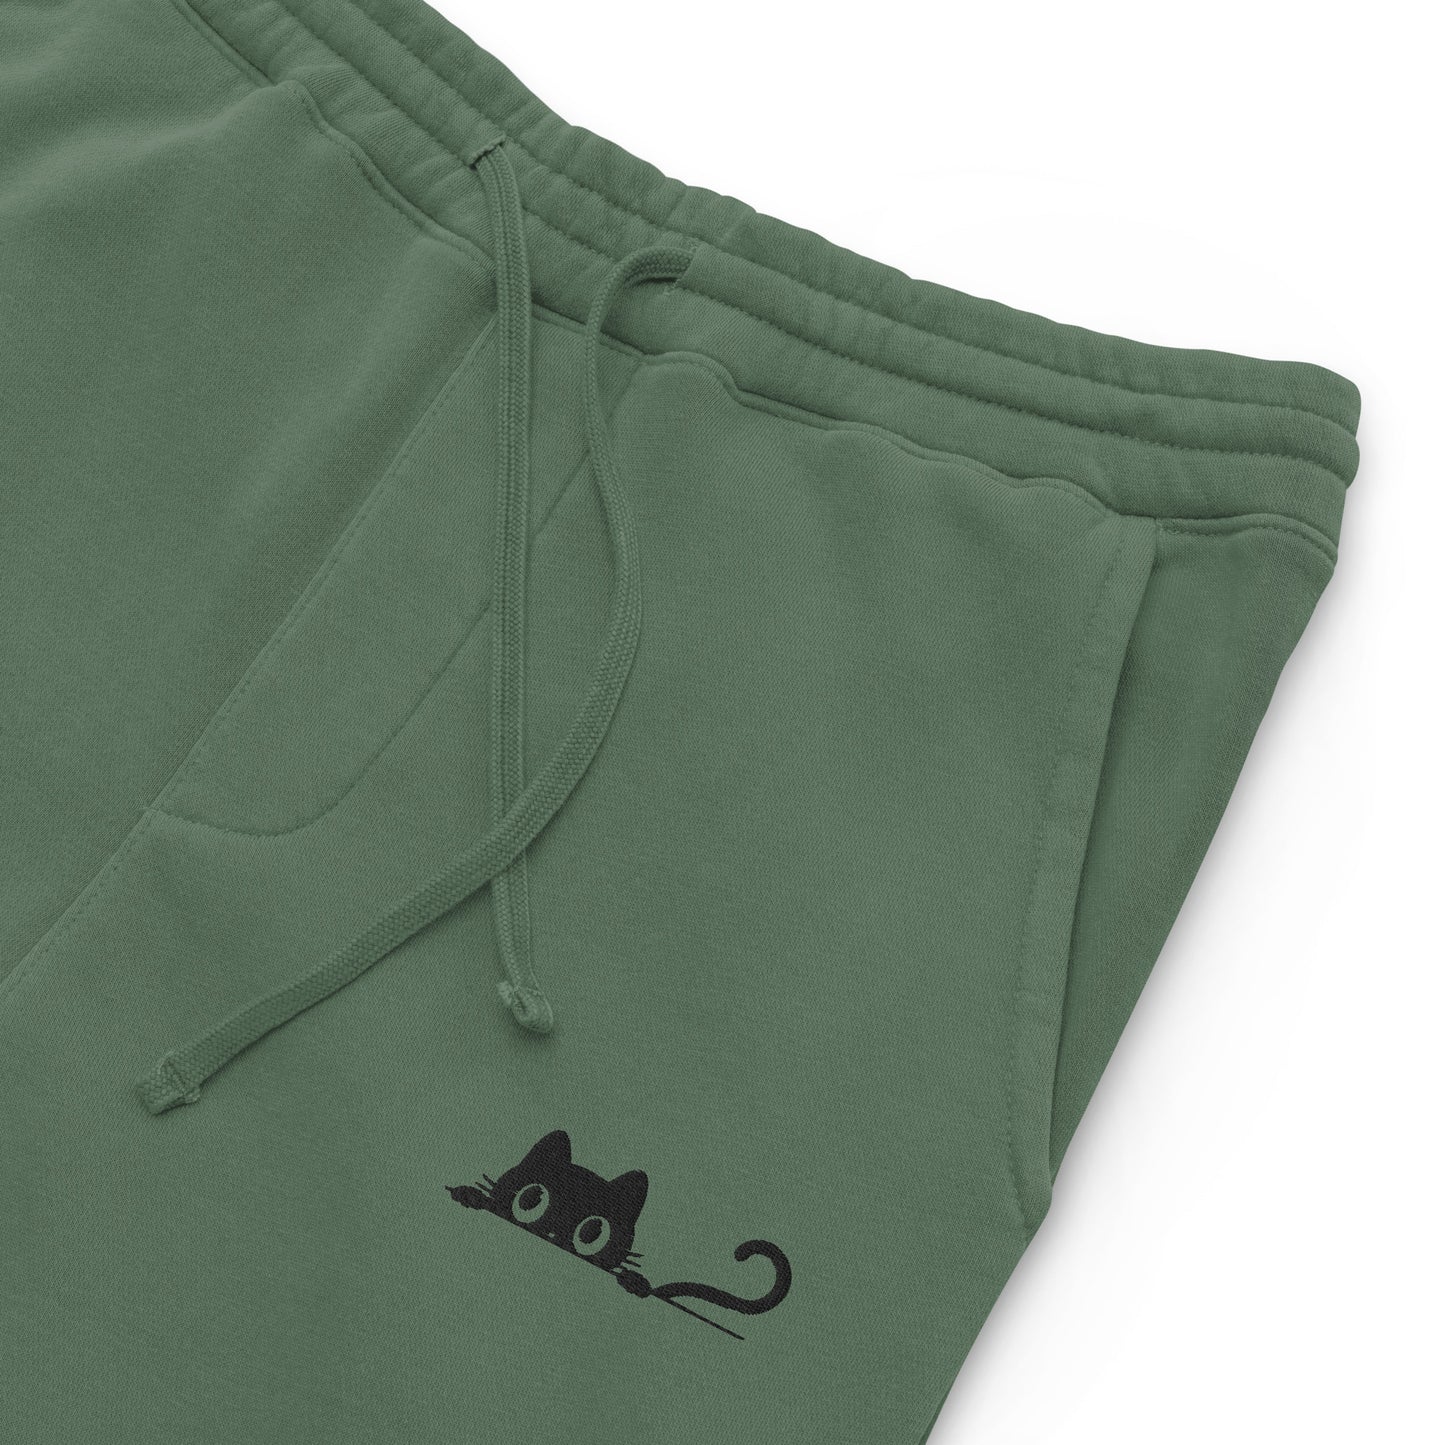 Embroidered Black Cat Sweatpants